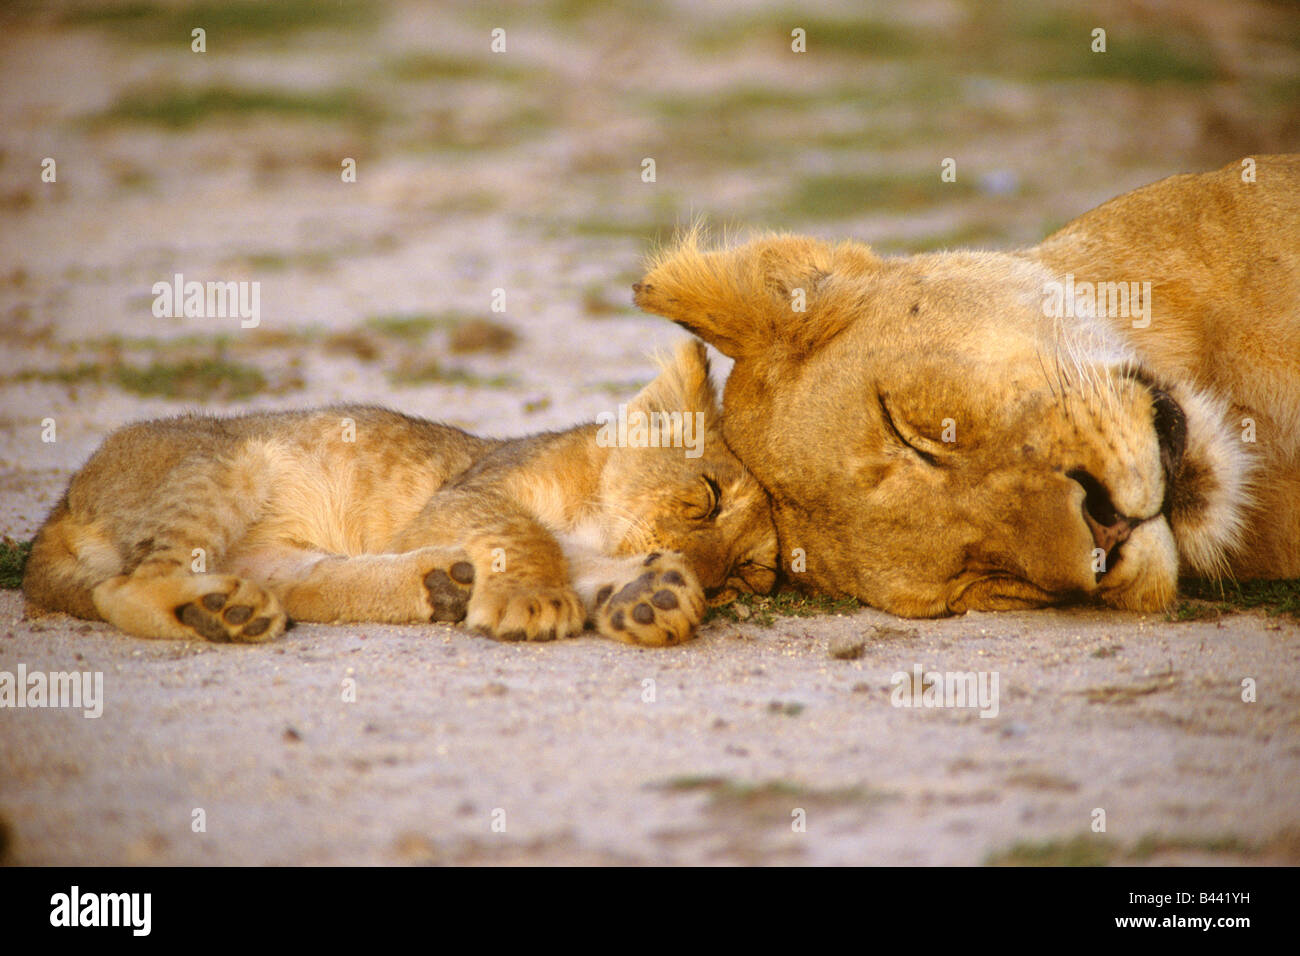 Lion (Panthera leo), sleeping lioness with cub Stock Photo